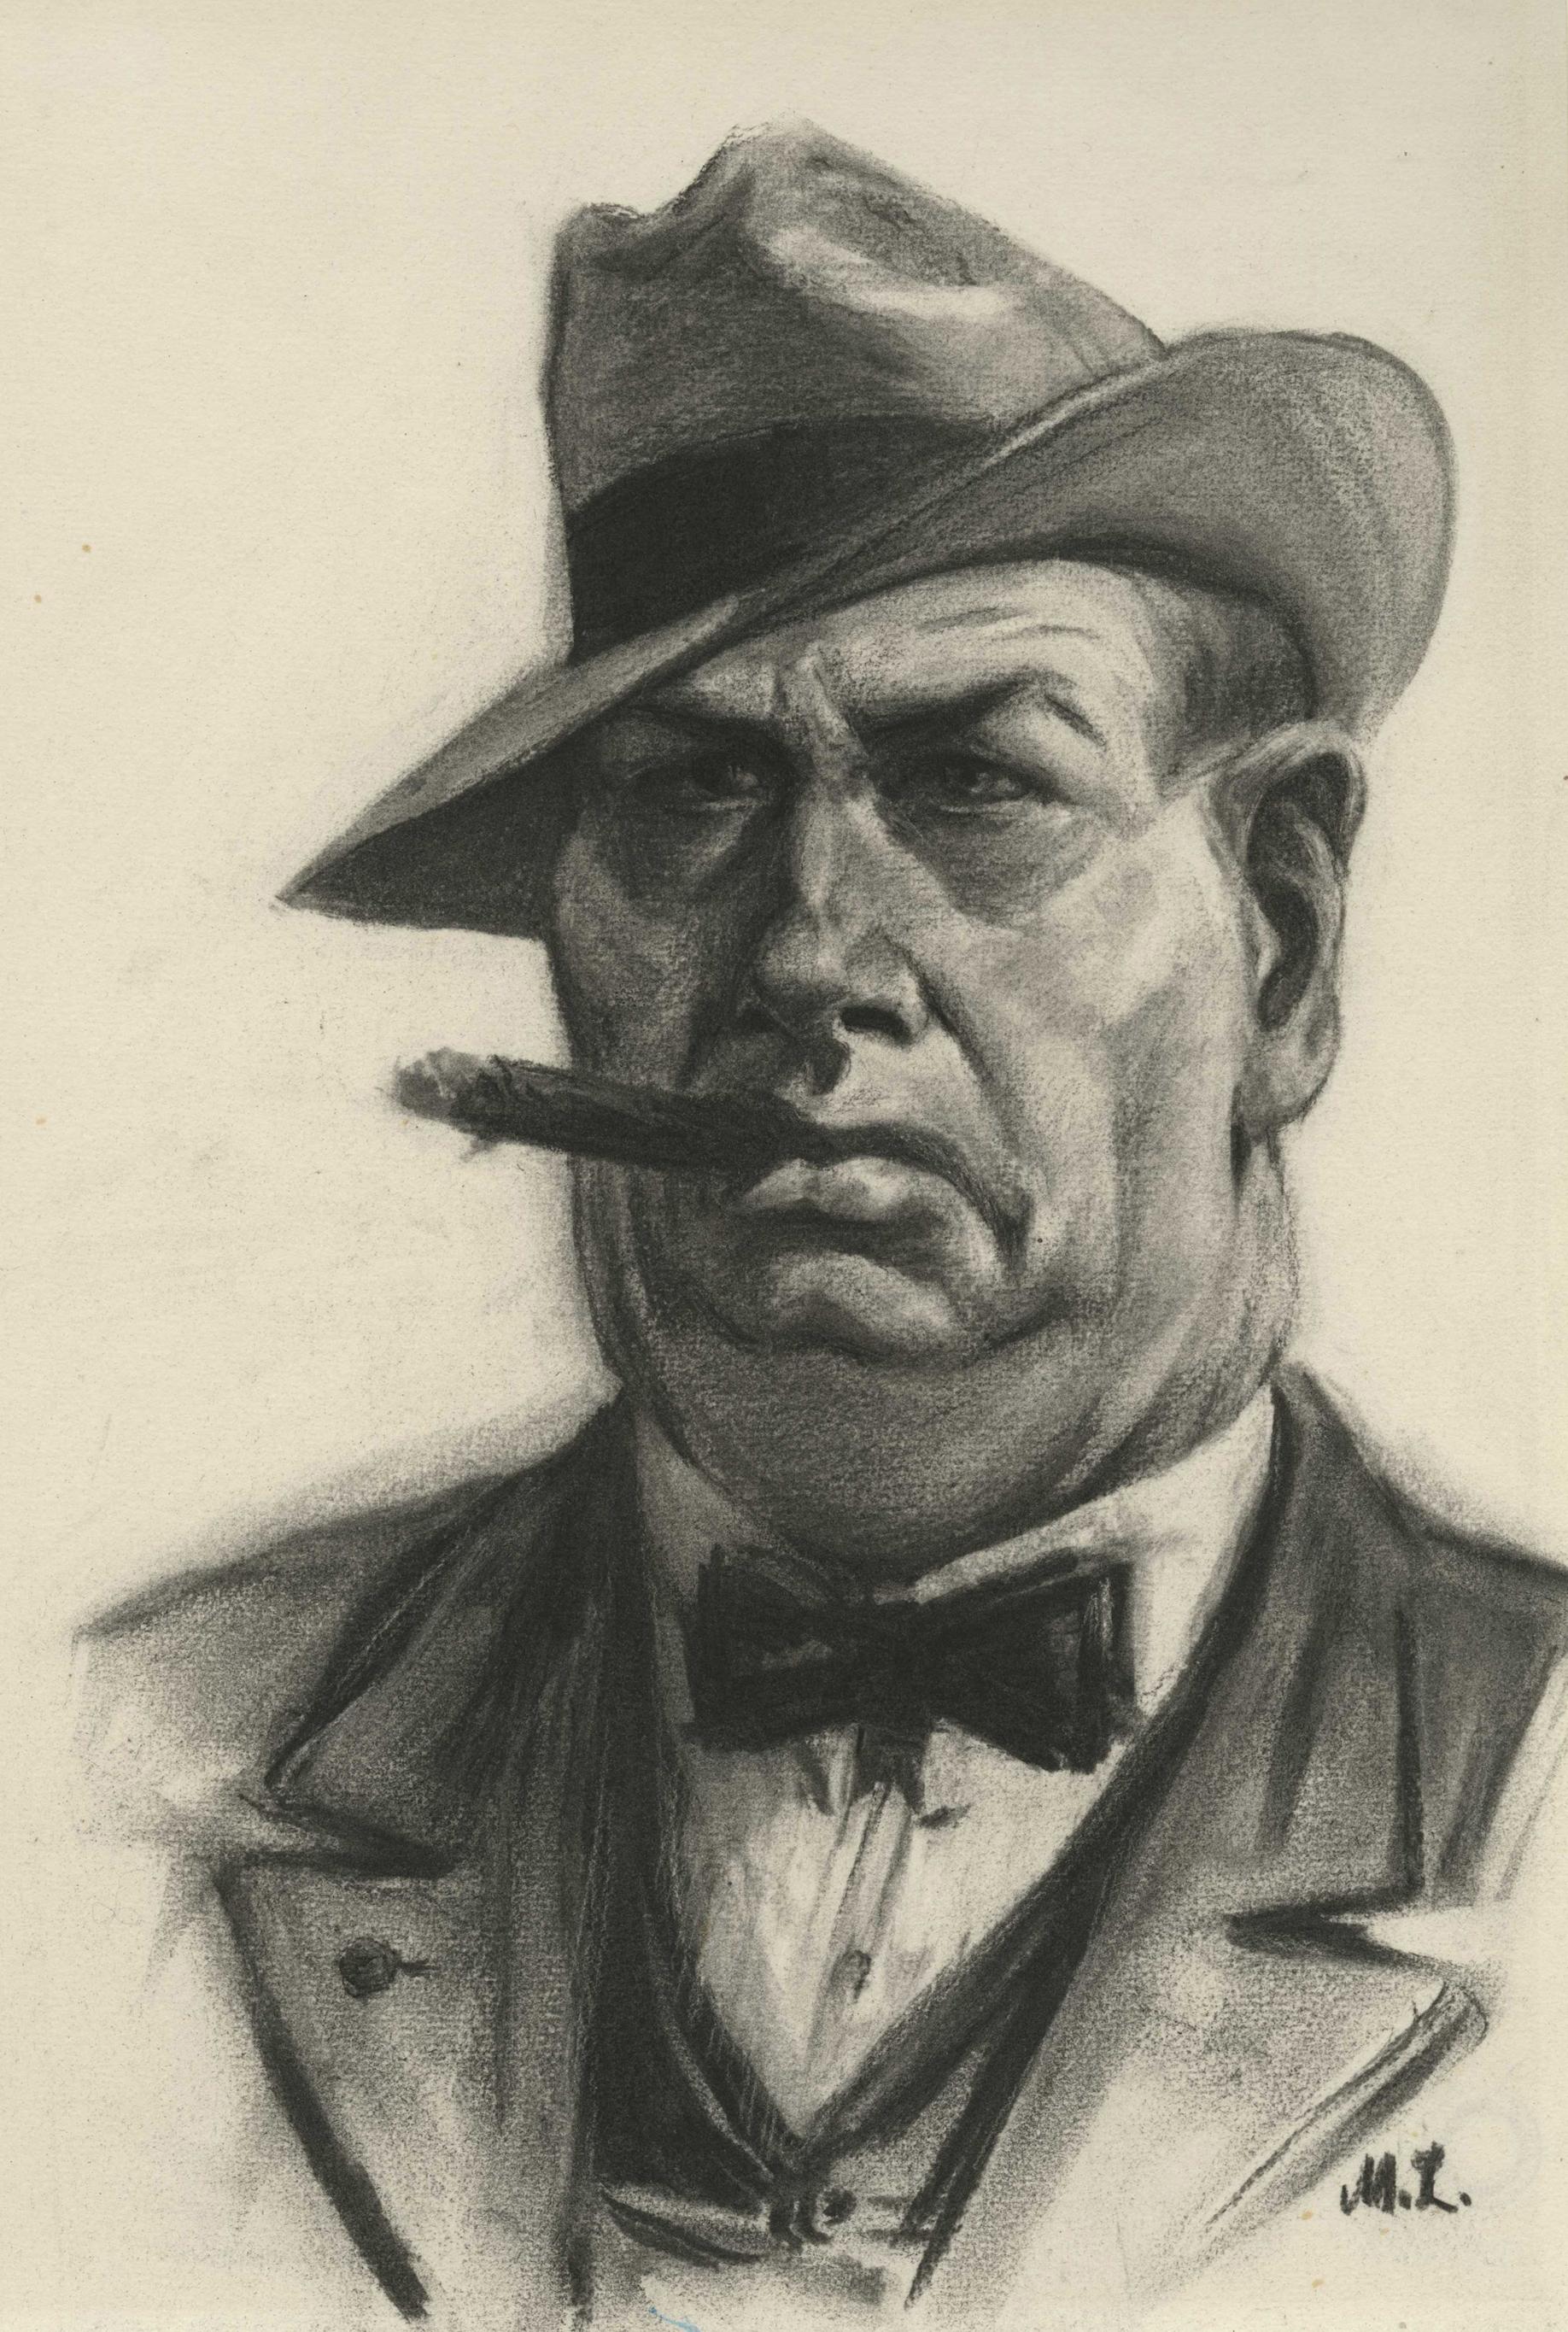 Martin Lewis Portrait - [Man with cigar]